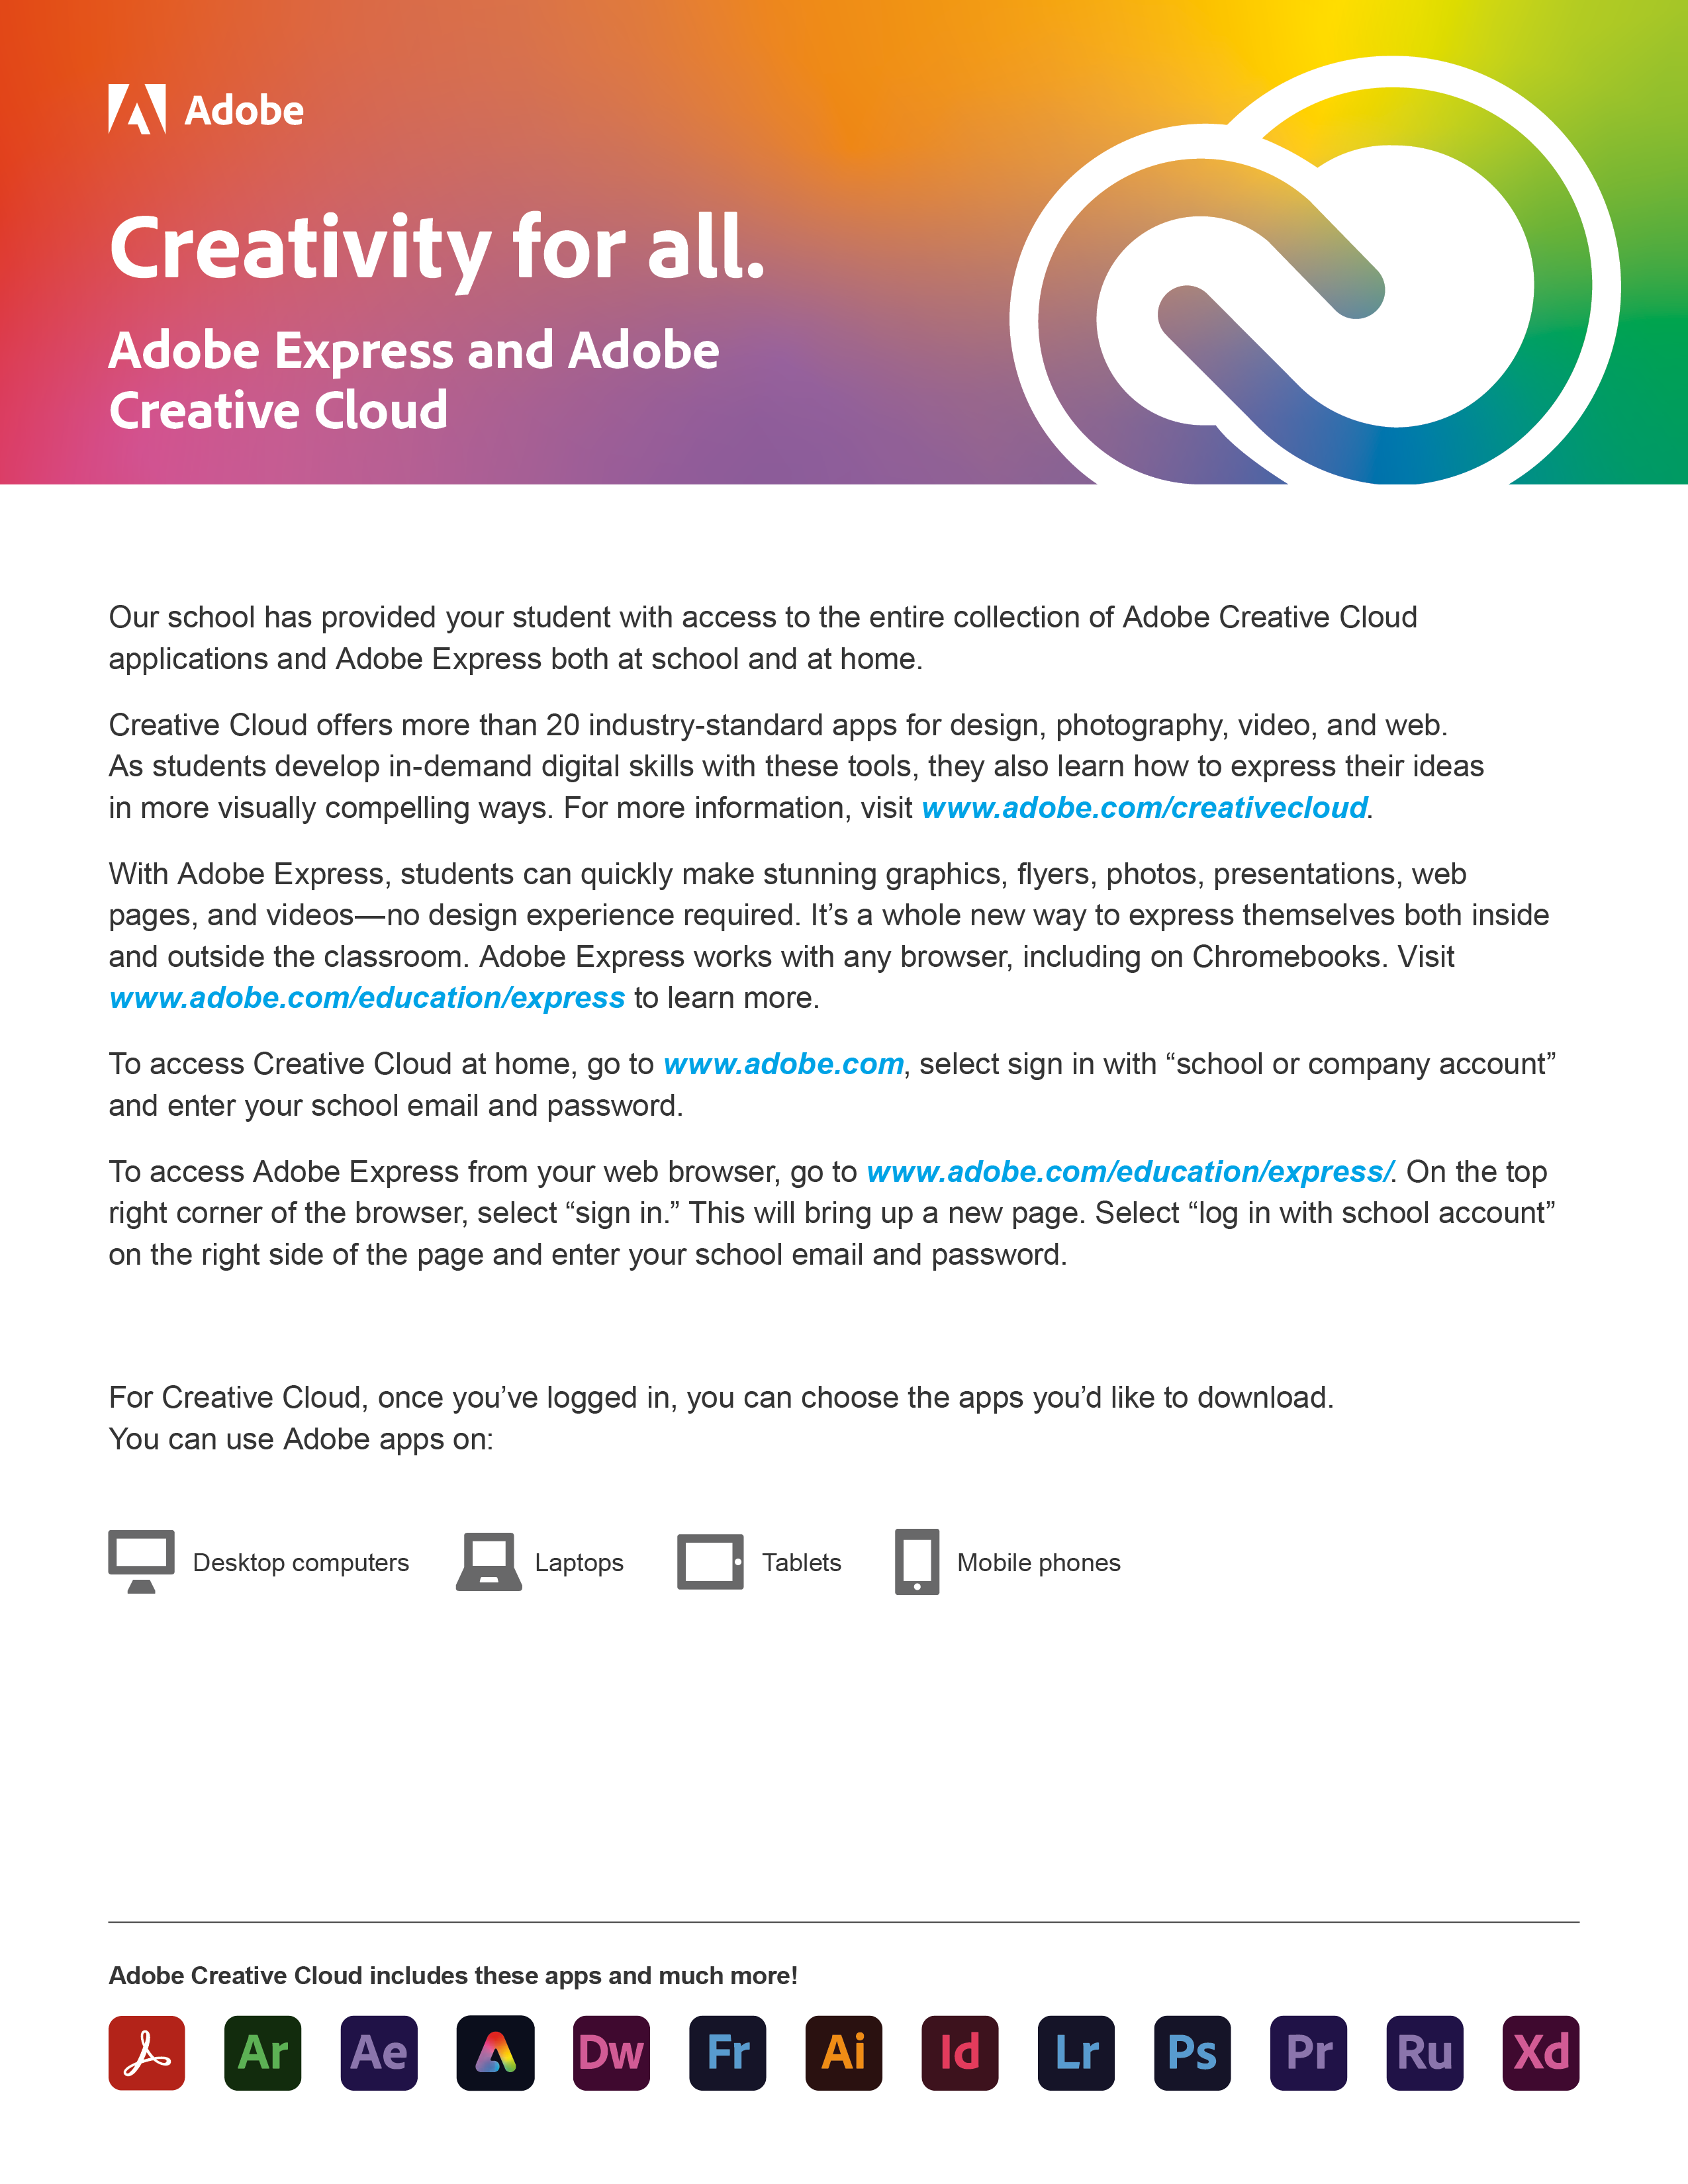 Adobe Express and Creative Cloud